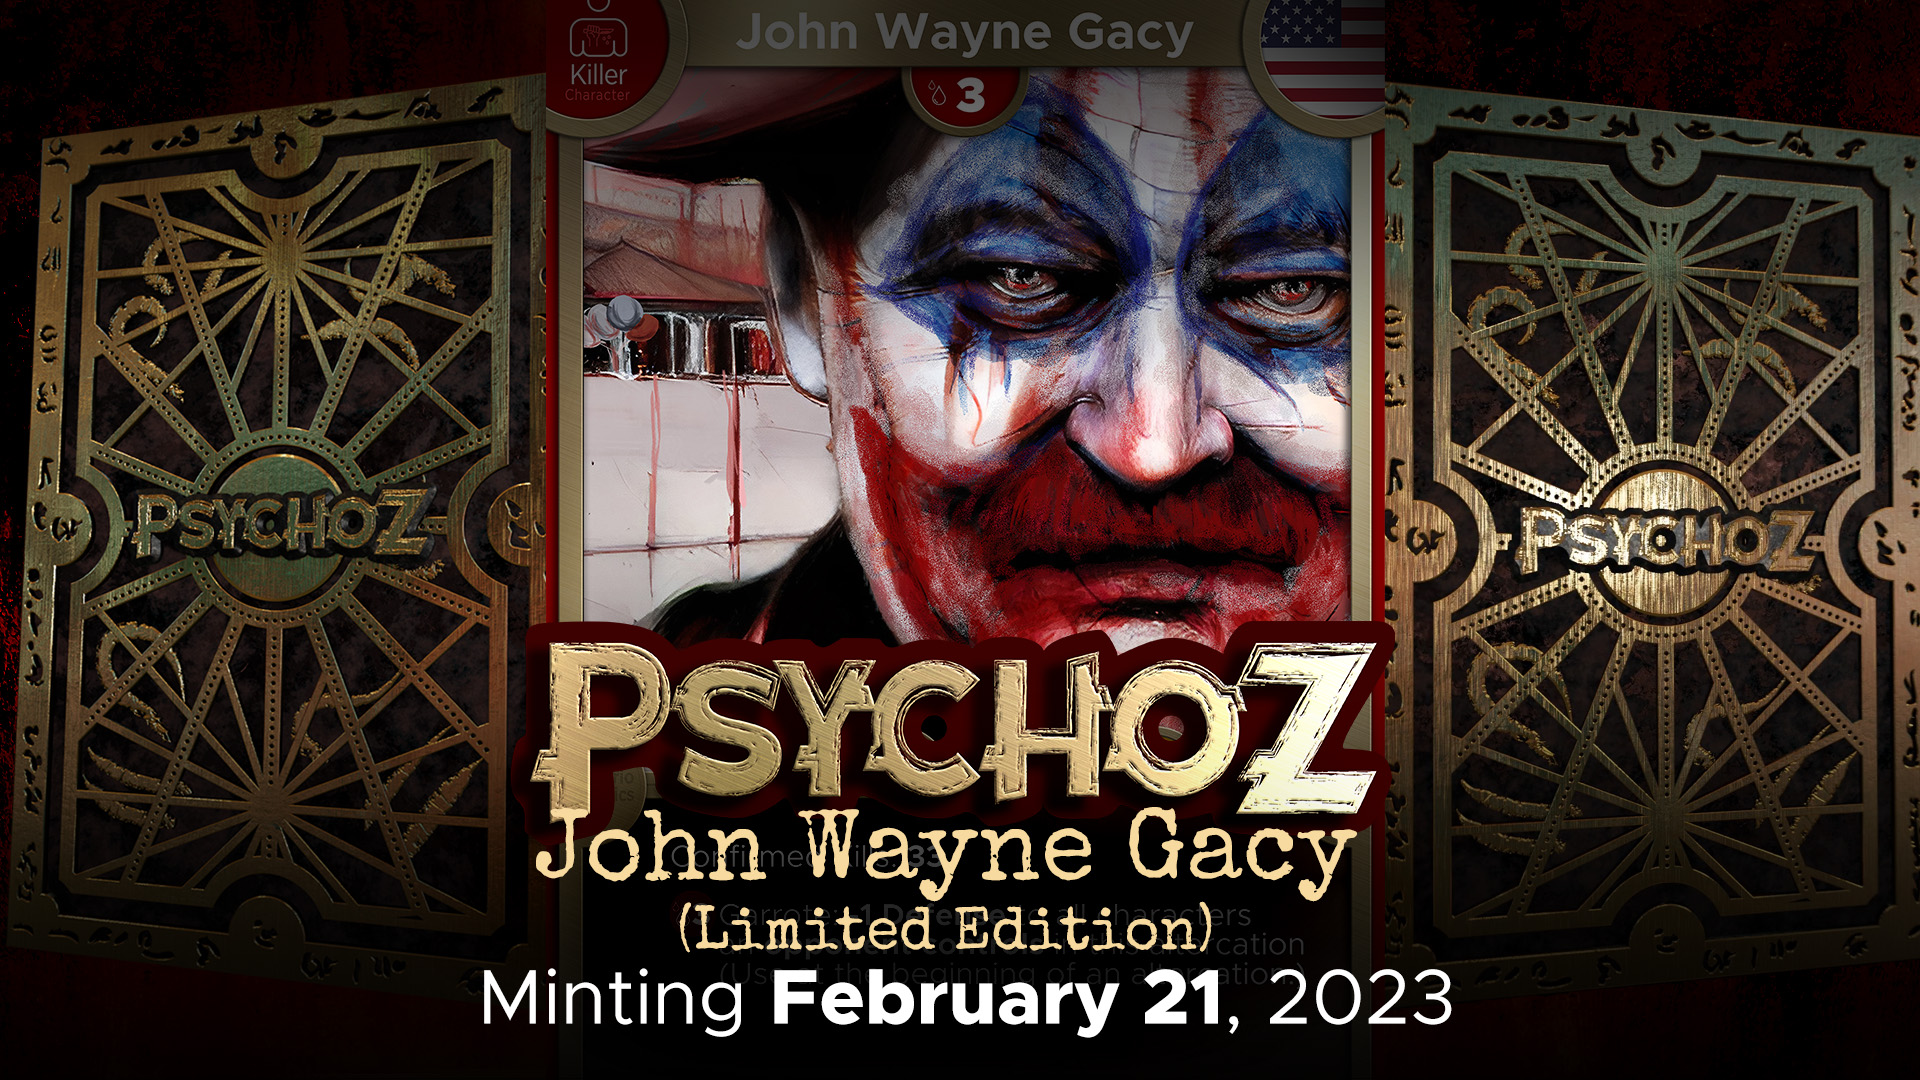 PSYCHOZ John Wayne Gacy Limited Edition Drop